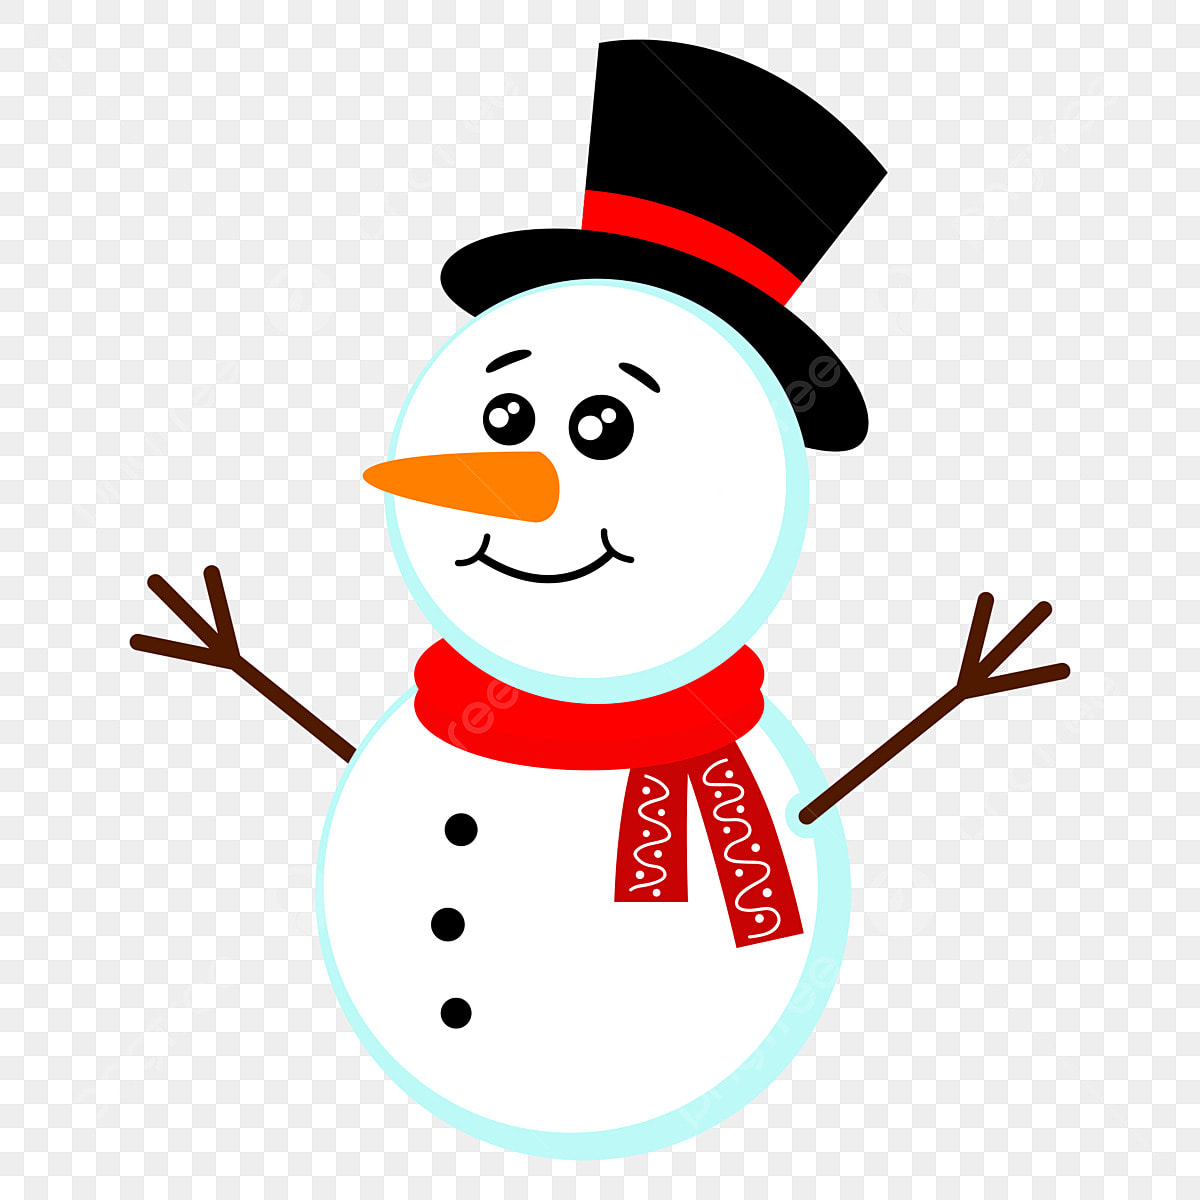 snowman cartoon images